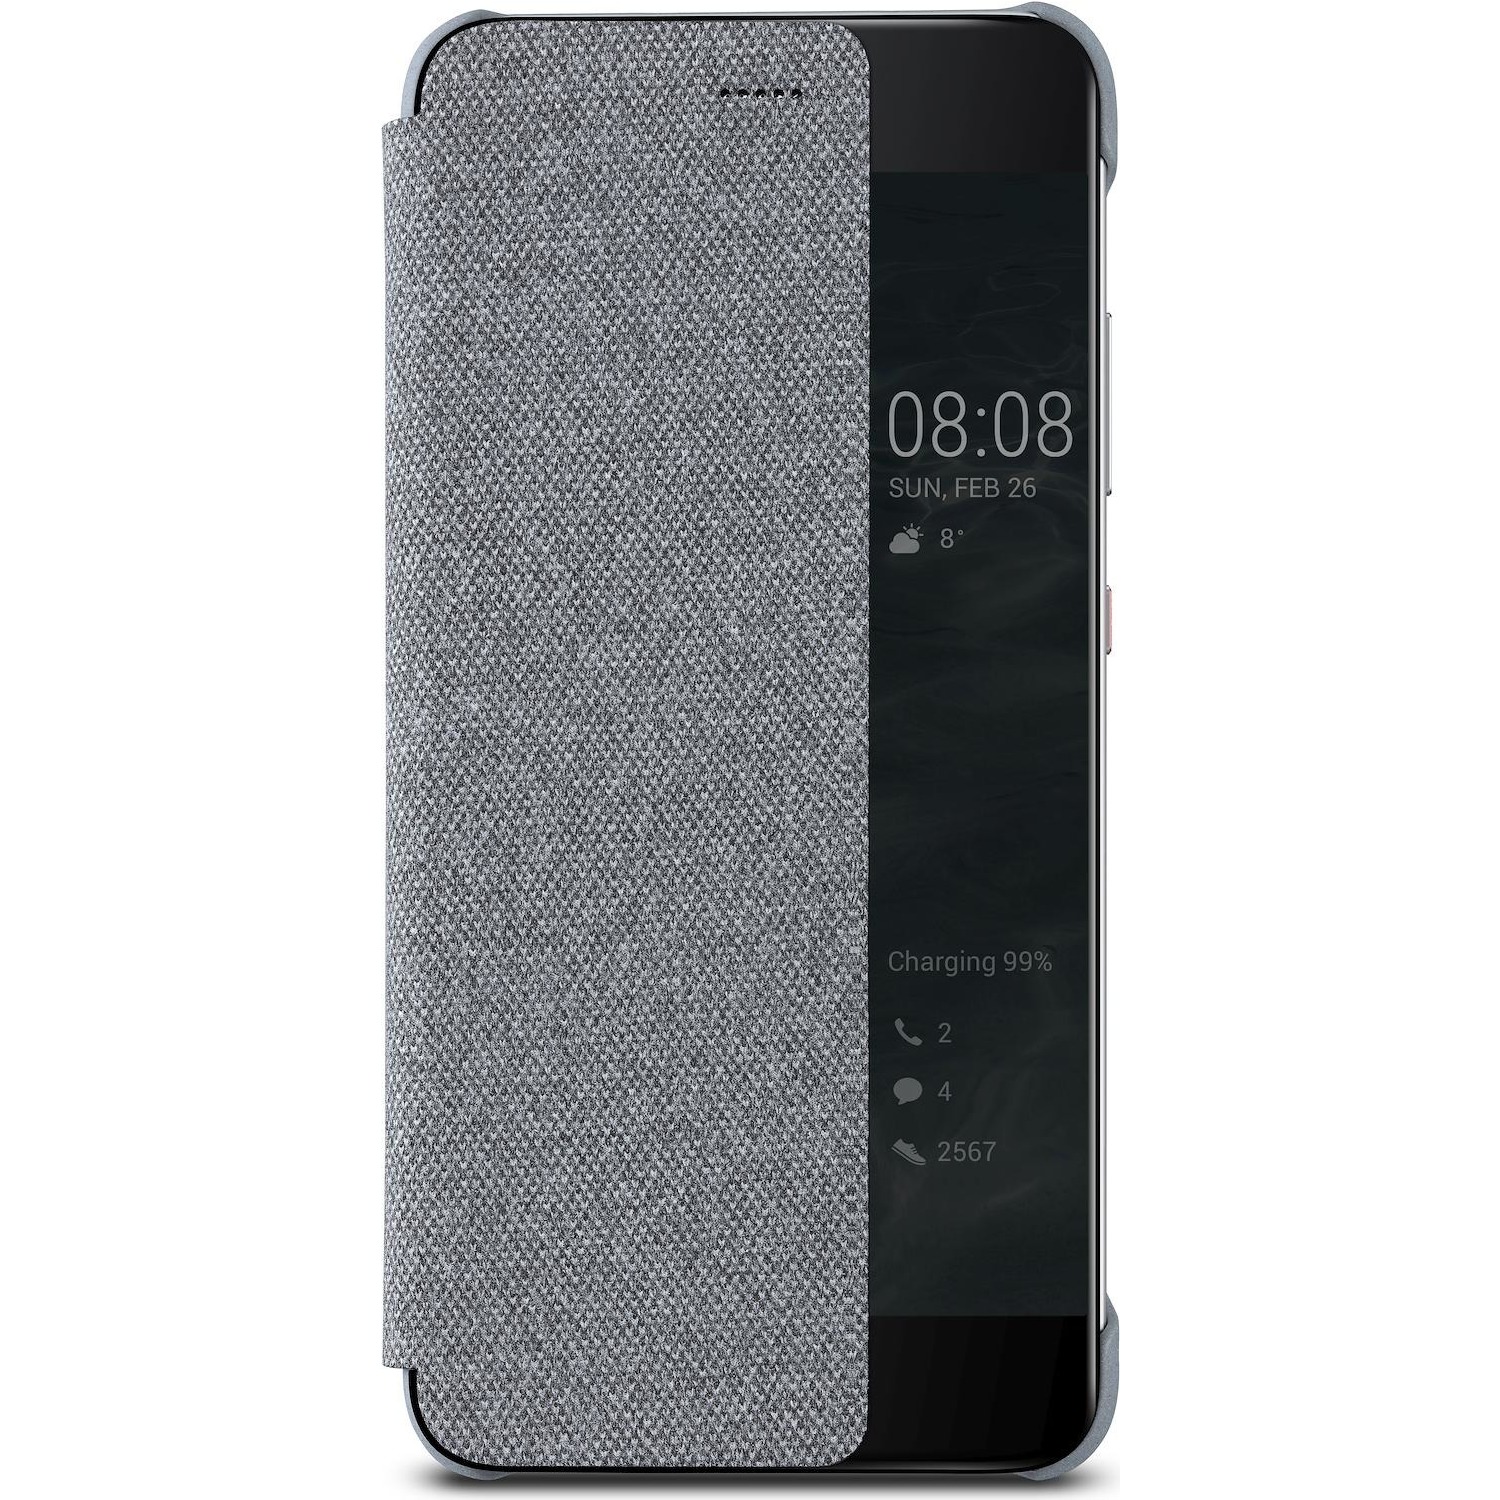 Immagine per View Flip cover per Huawei P10 light gray da DIMOStore